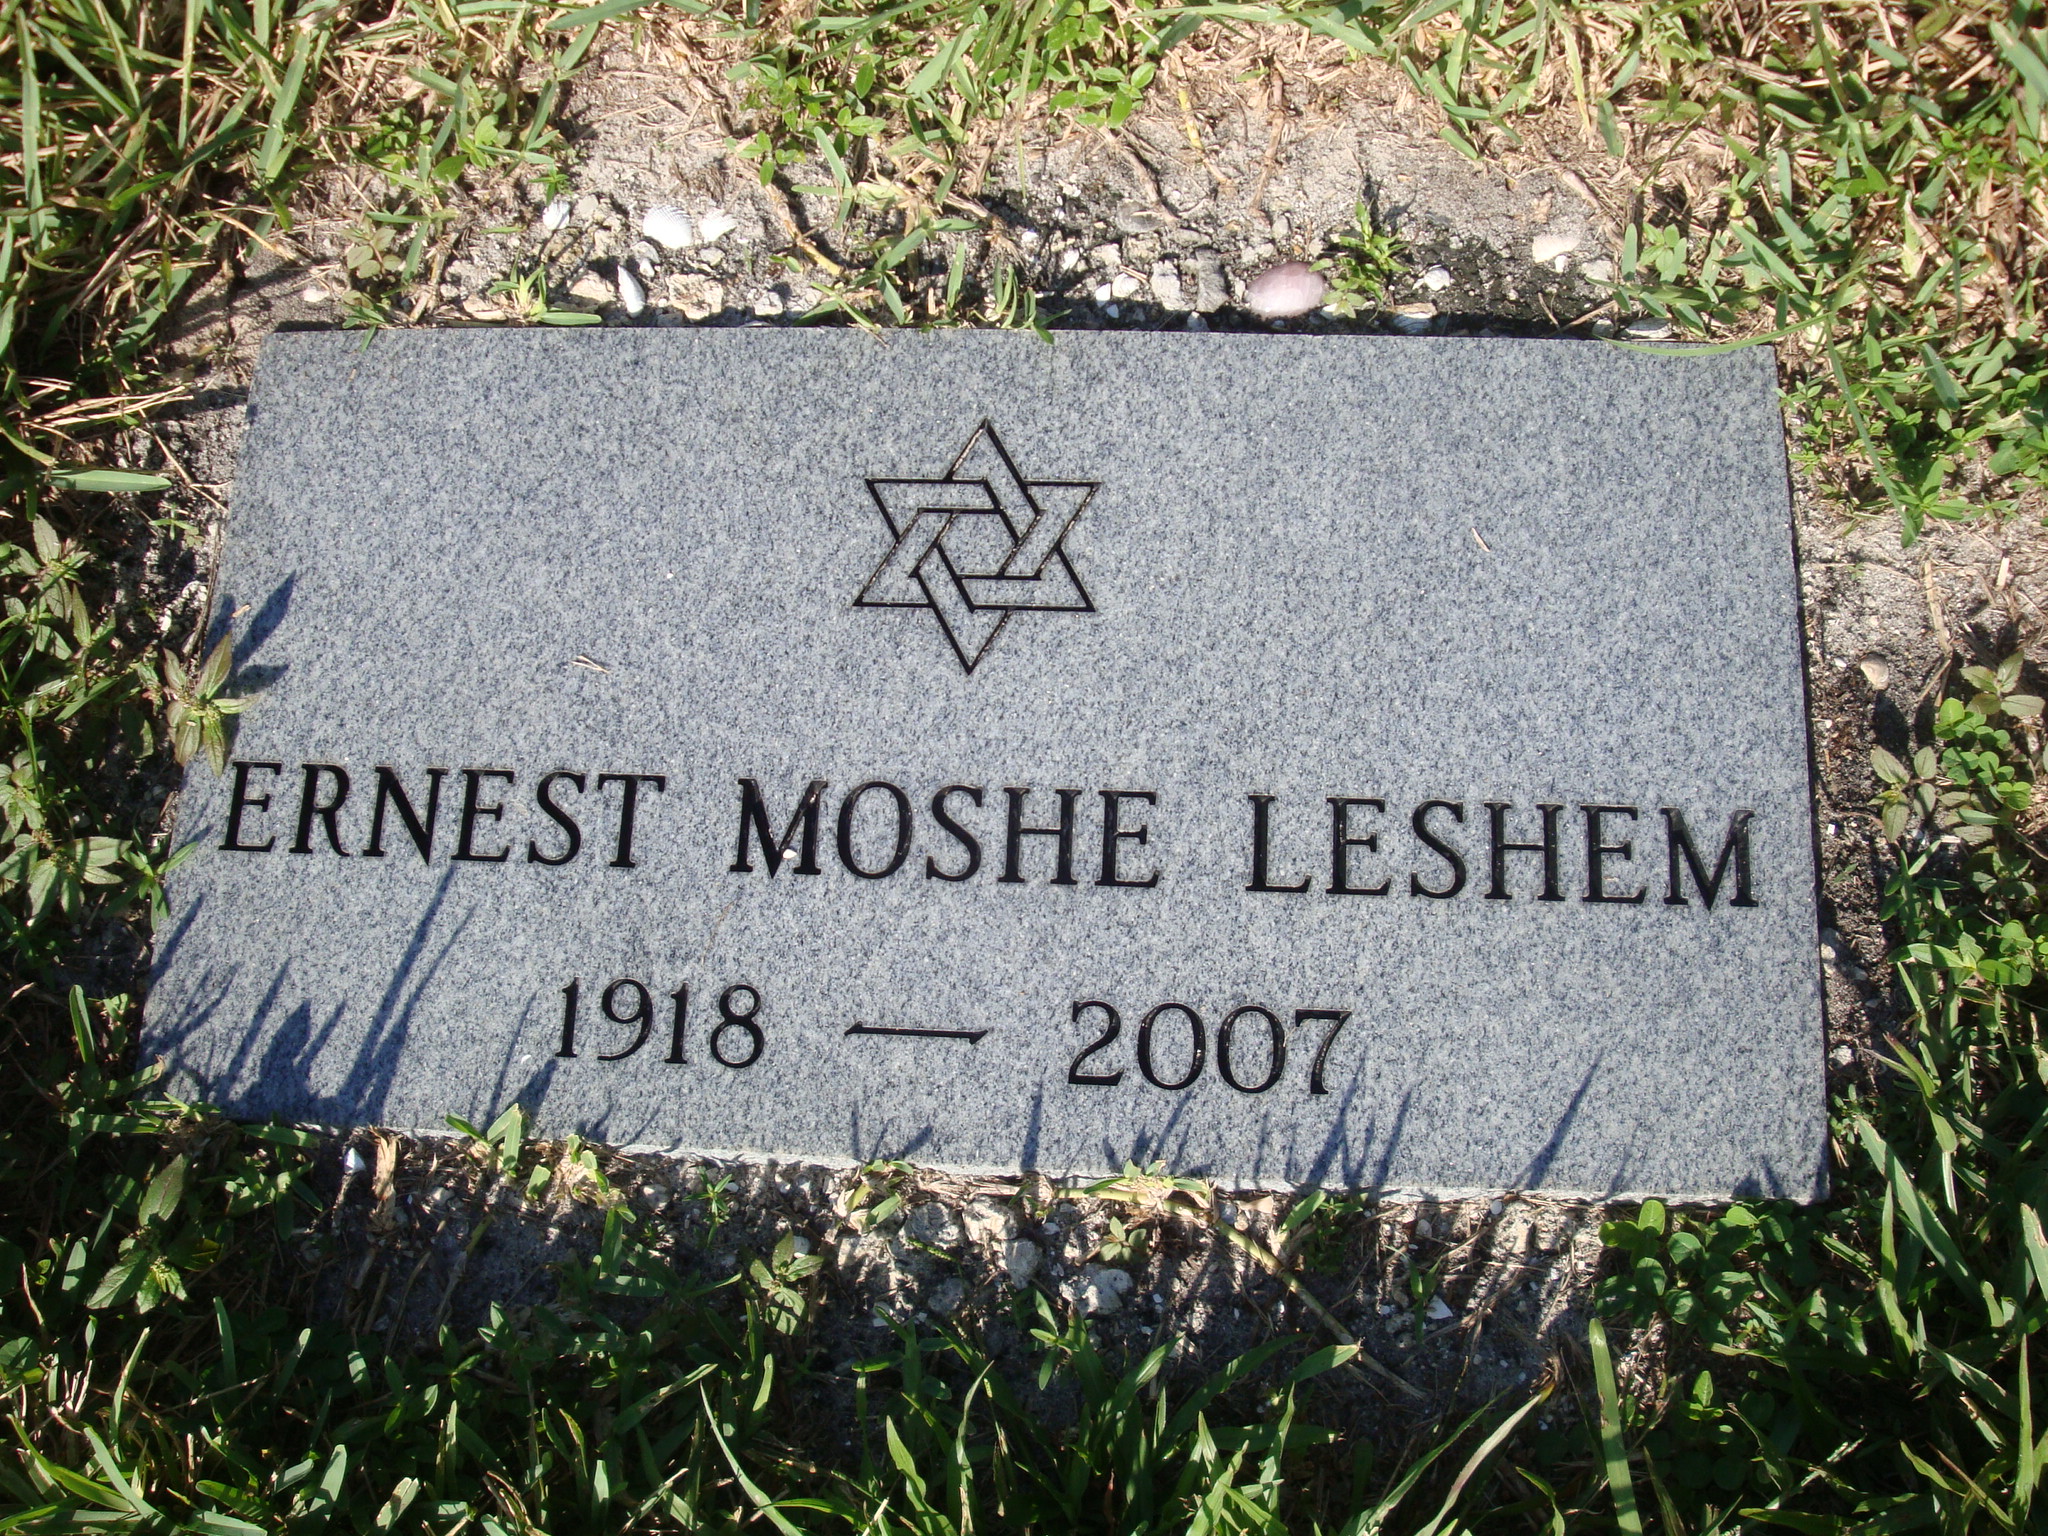 Ernest Moshe Leshem